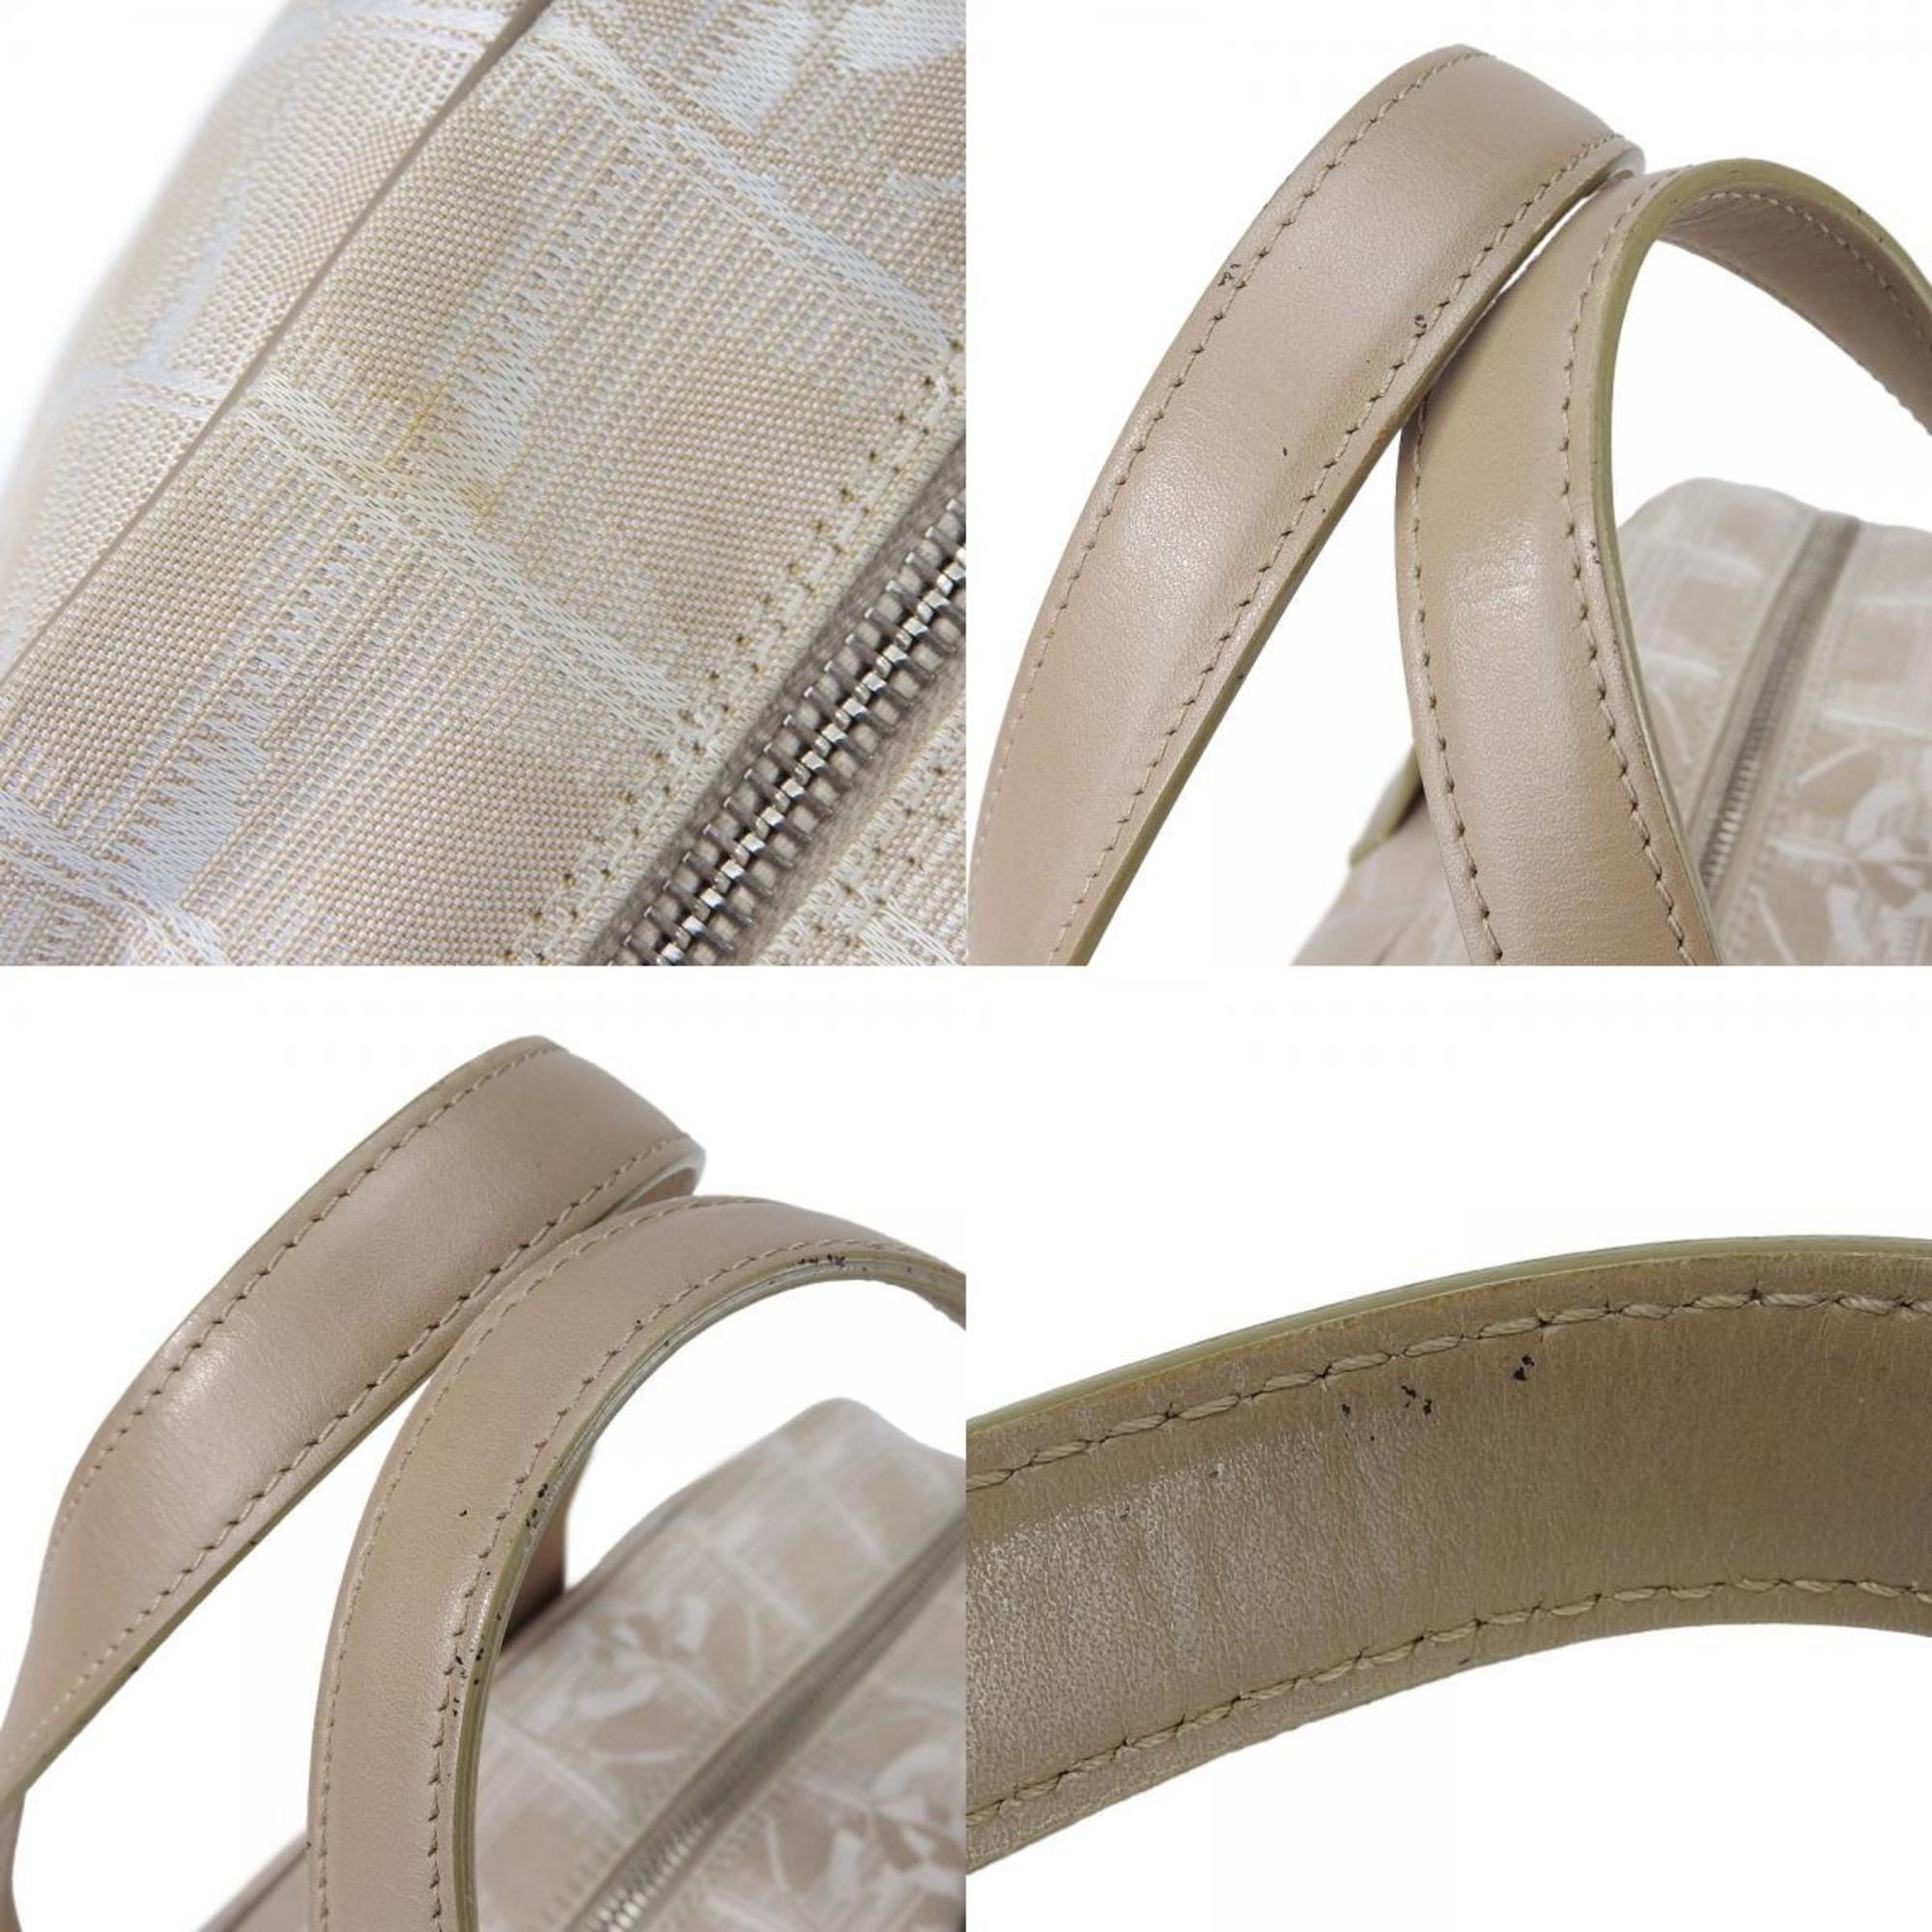 Chanel handbag New Travel Line Jacquard nylon leather Beige No. 7 Coco mark Women's CHANEL